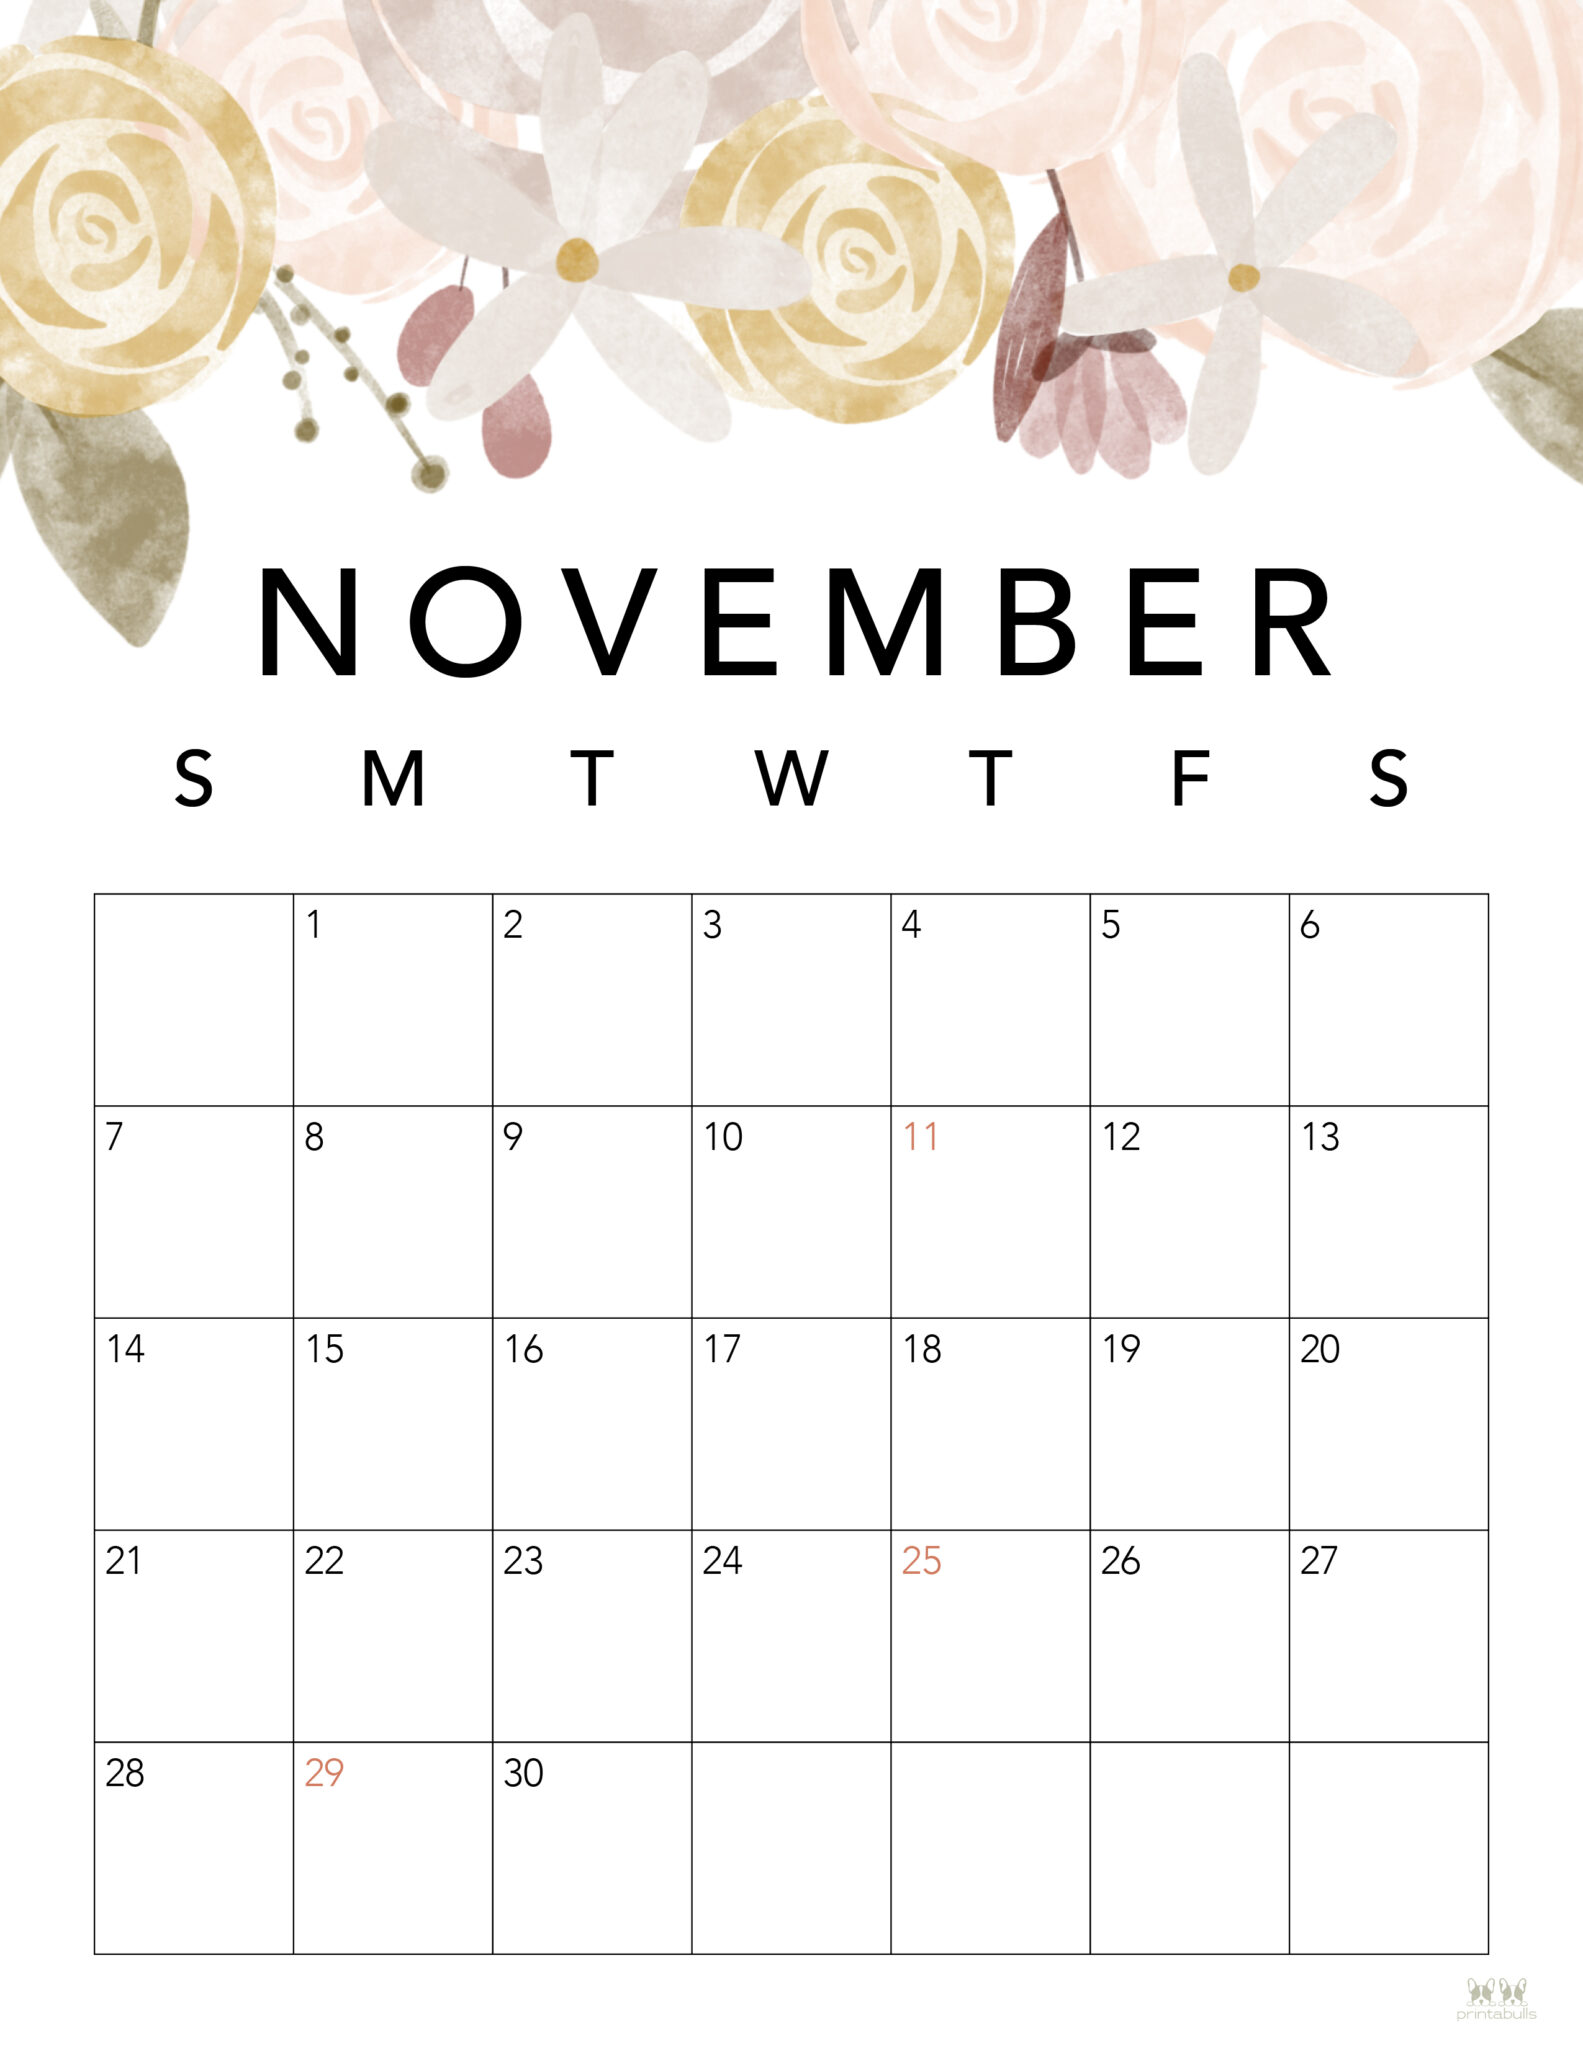 November 2021 Calendars - 15 FREE Printables | Printabulls